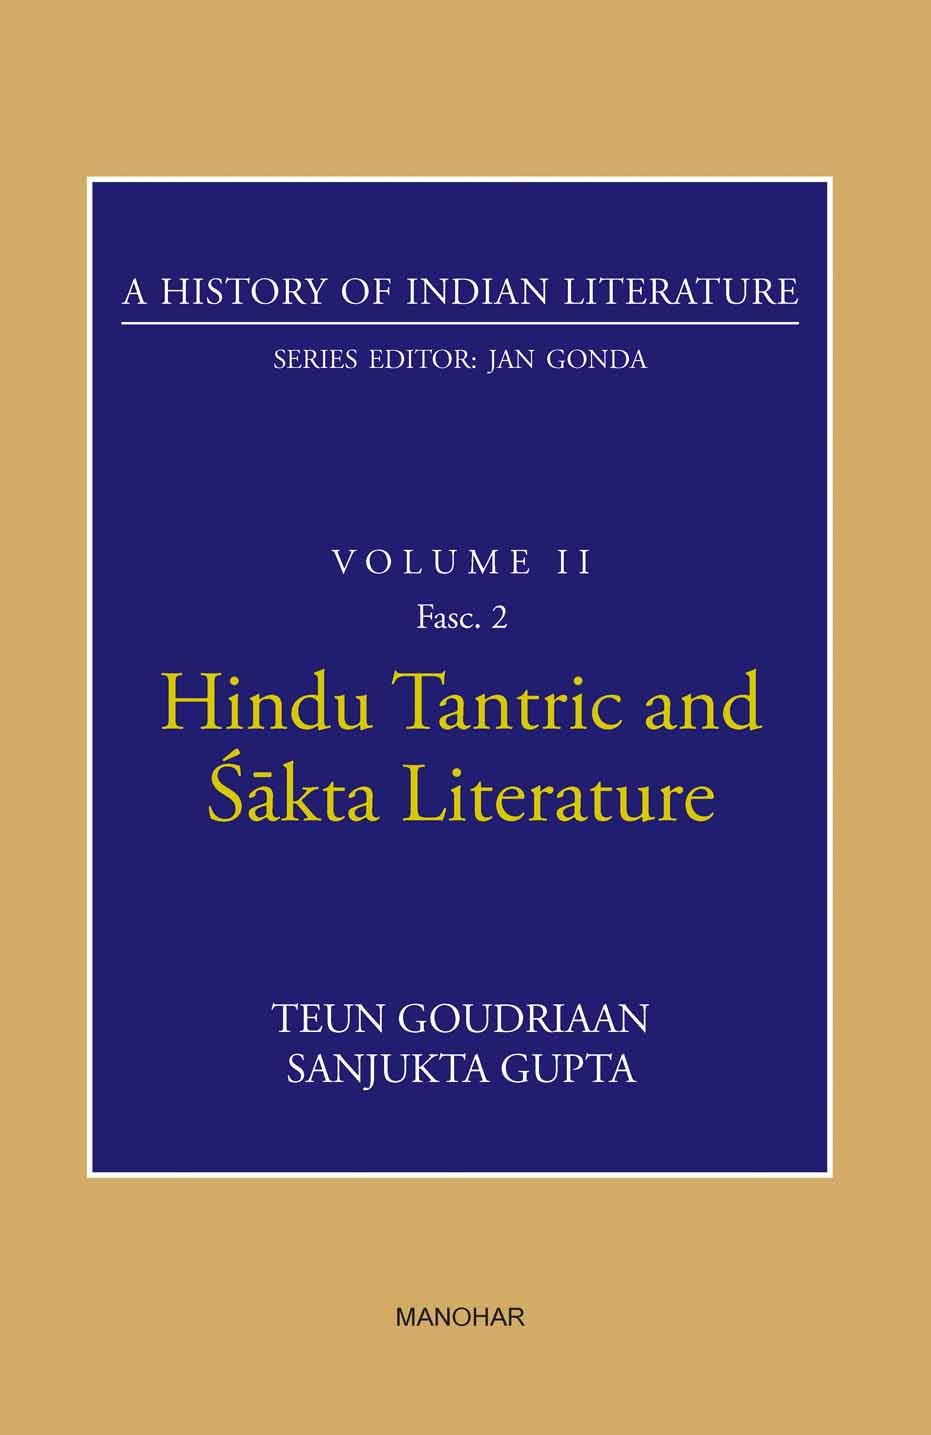 A HISTORY OF INDIAN LITERATURE: VOLUME II: HINDU TANTRIC AND SAKTA LITERATURE